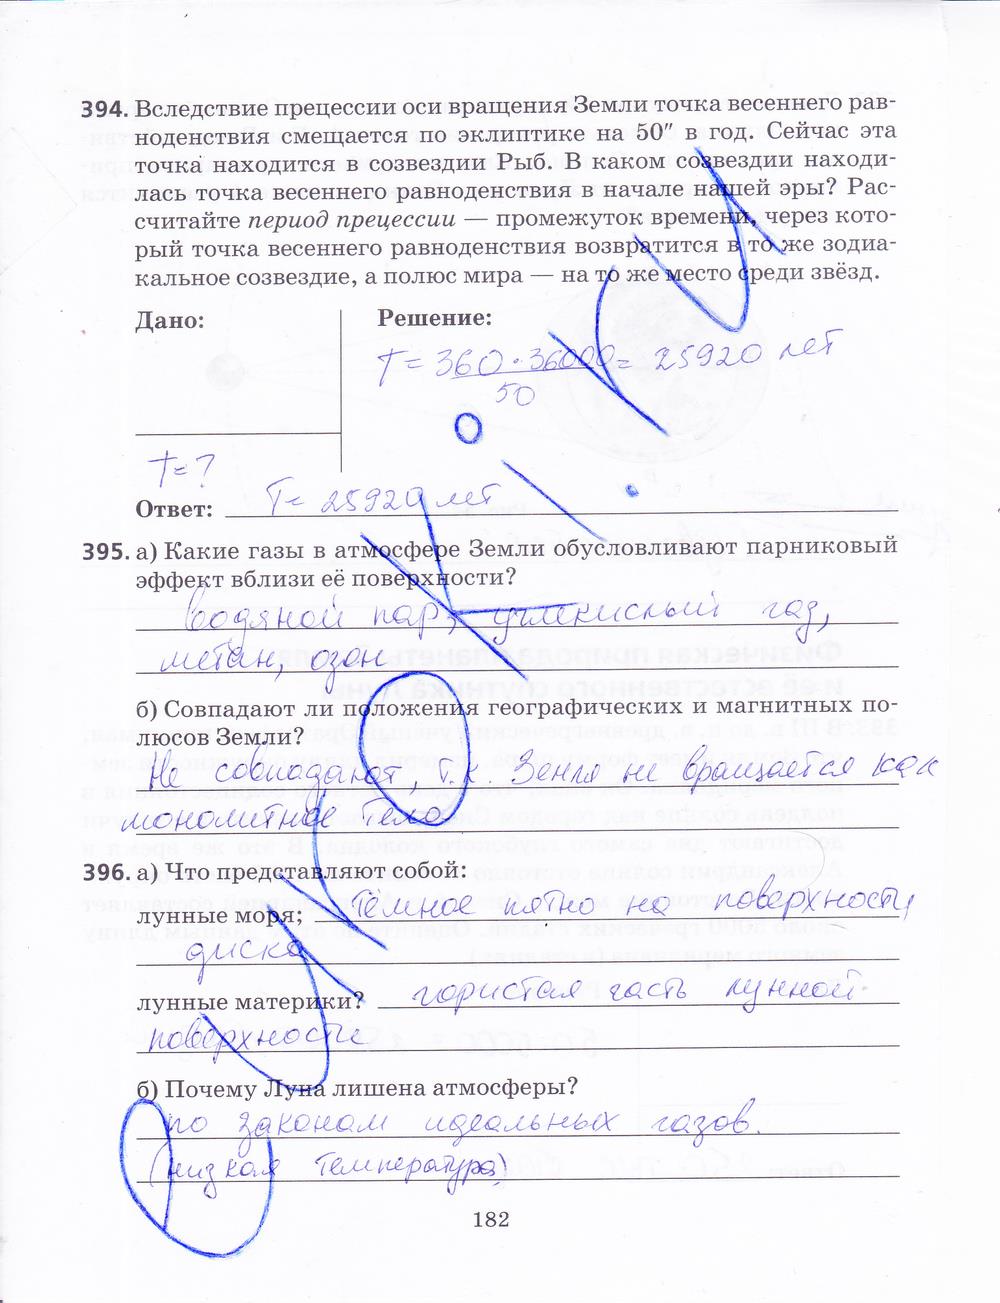 гдз 9 класс рабочая тетрадь страница 182 физика Пурышева, Важеевская, Чаругин